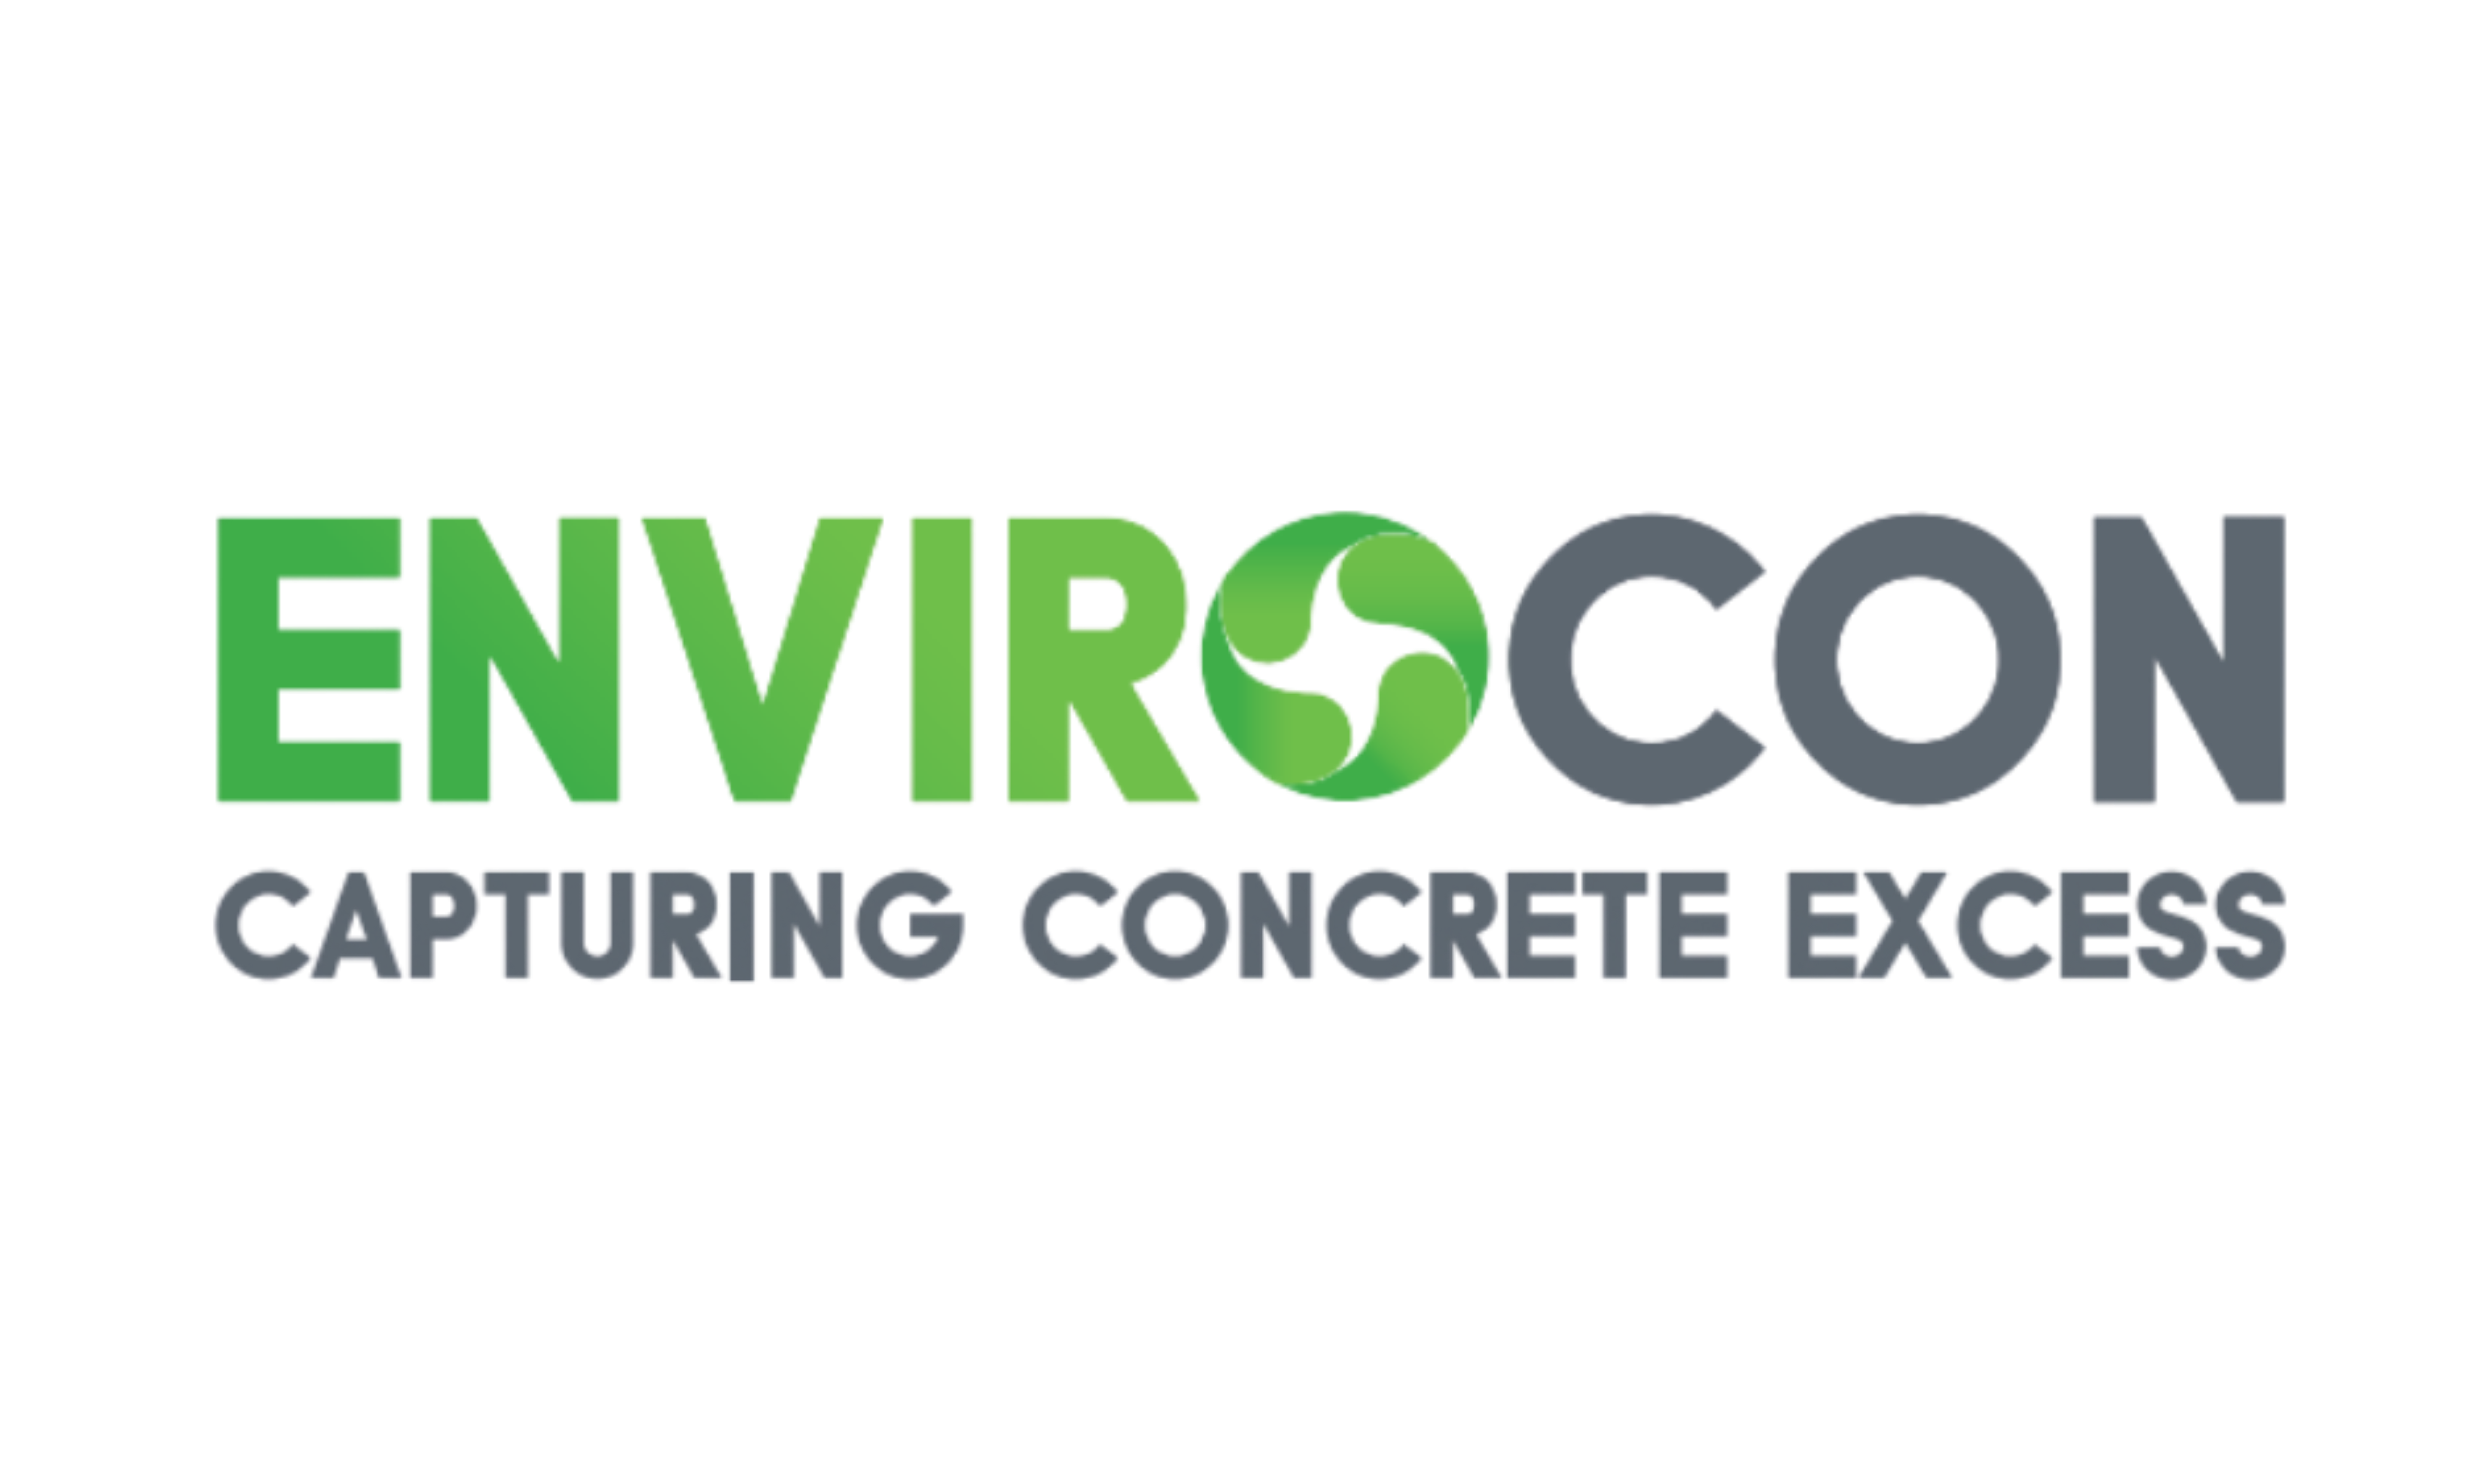 Envirocon: Capturing Concrete Excess